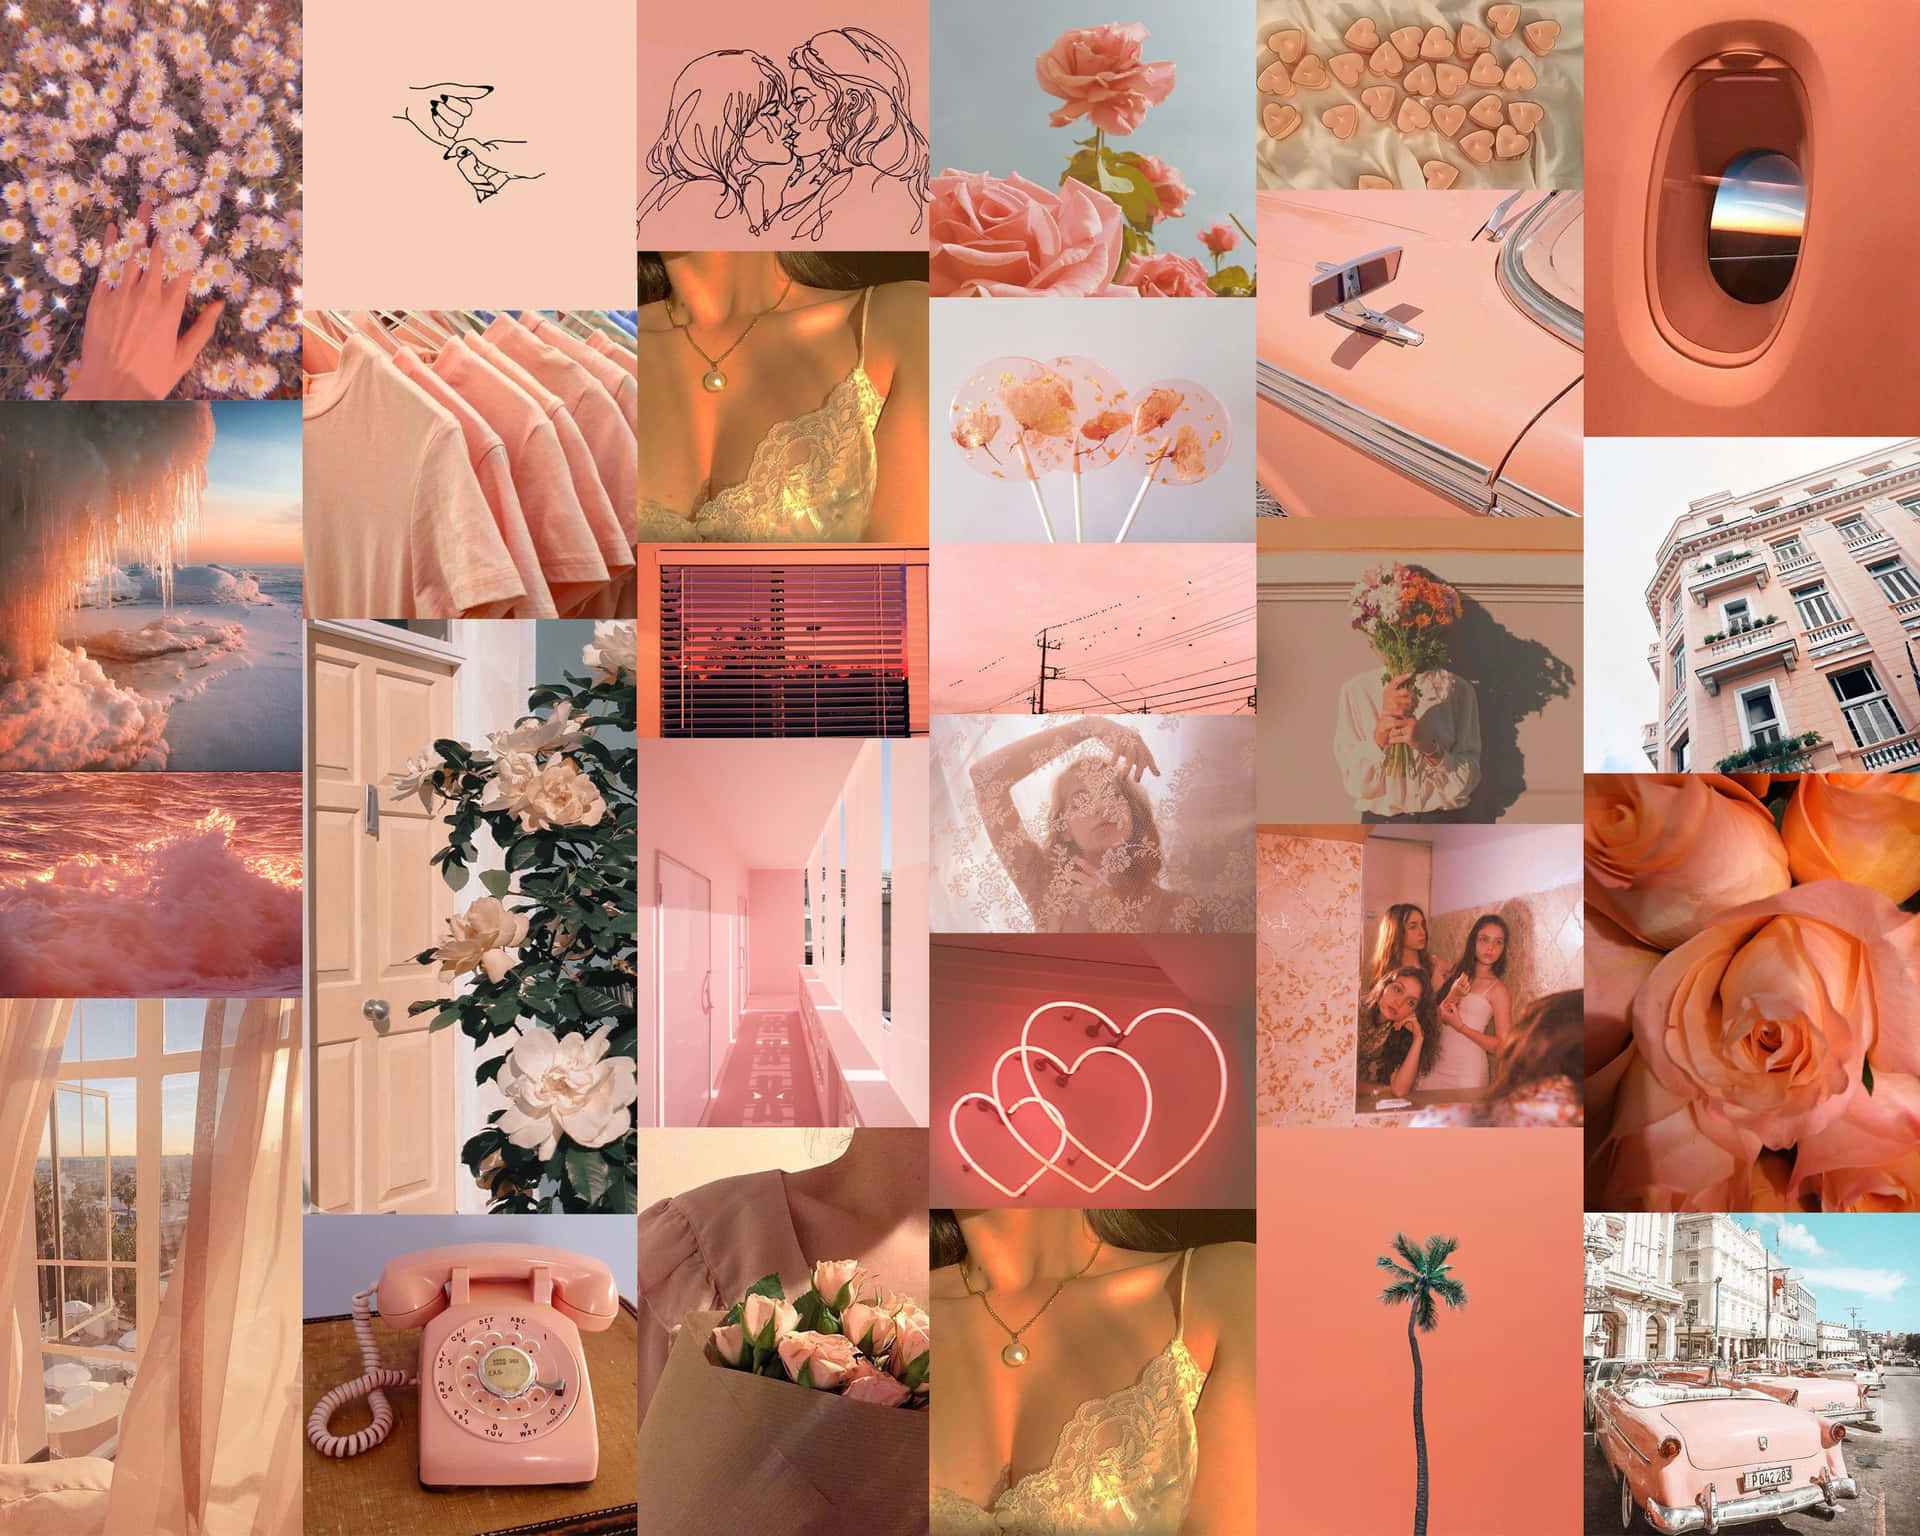 Peach Aesthetic Background